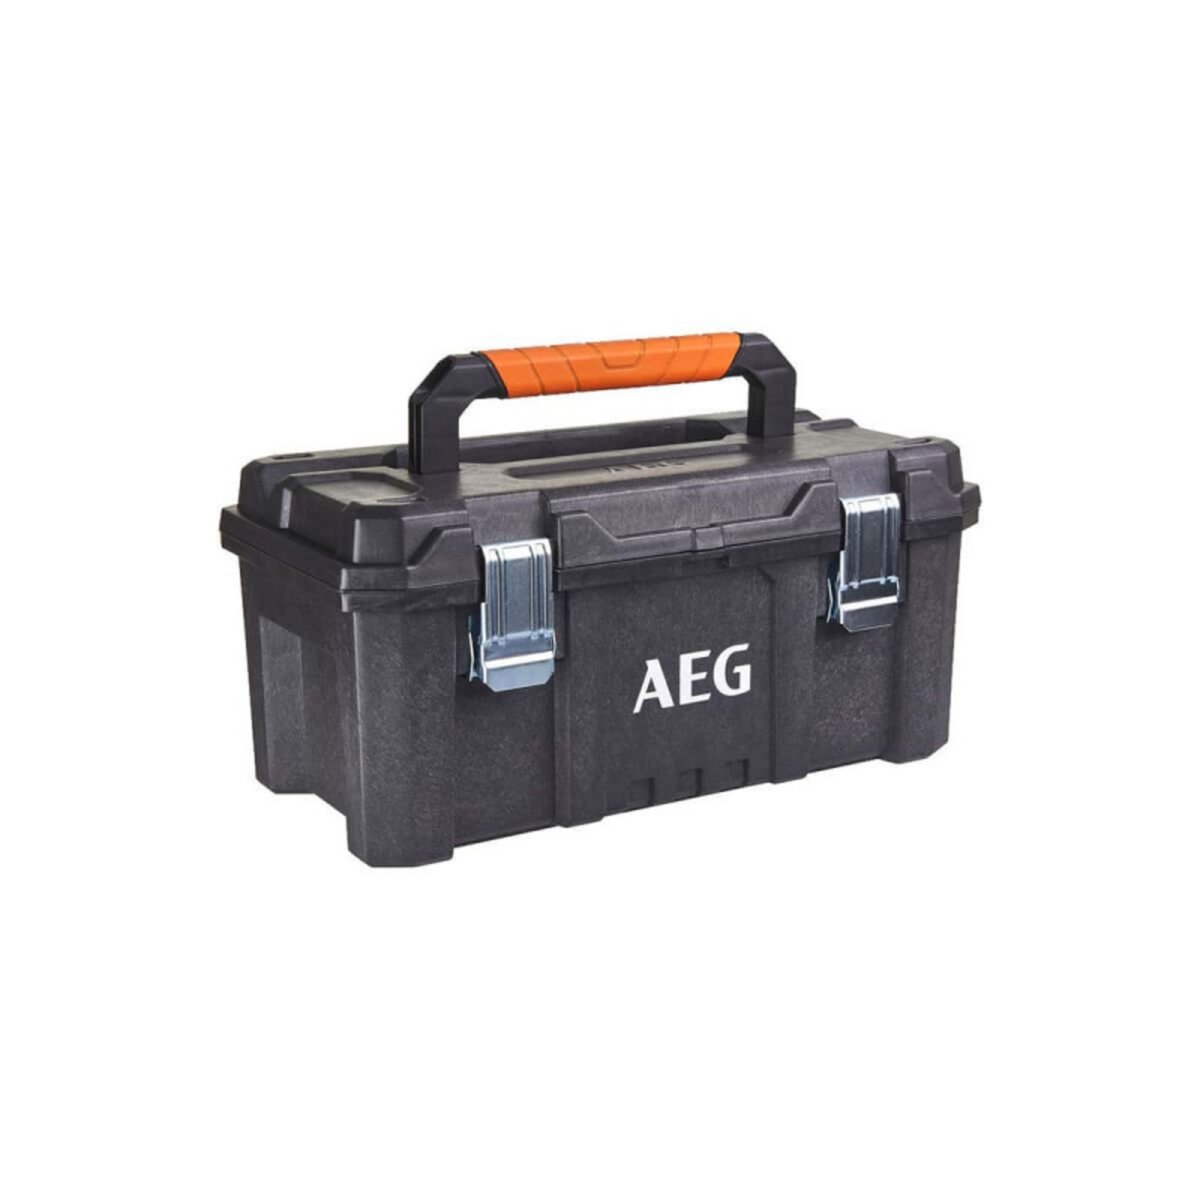 AEG Caisse de rangement AEG 53.5x 28.8x 25.4cm - AEG21TB